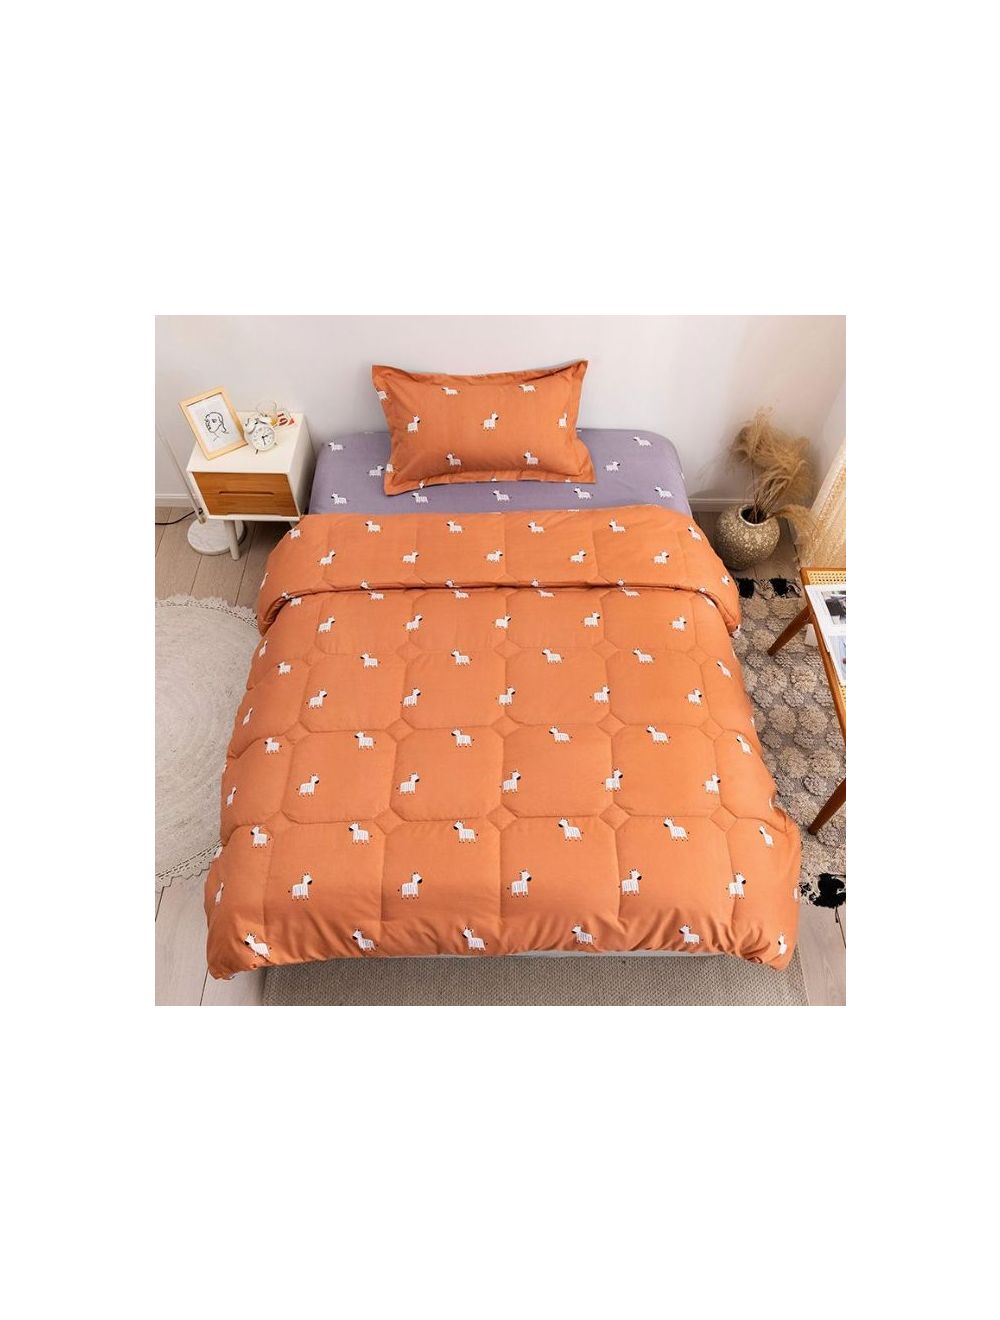 Rishahome 3 Piece Single Size Comforter Set Microfiber Multicolour 150x200cm-DTWCS0003